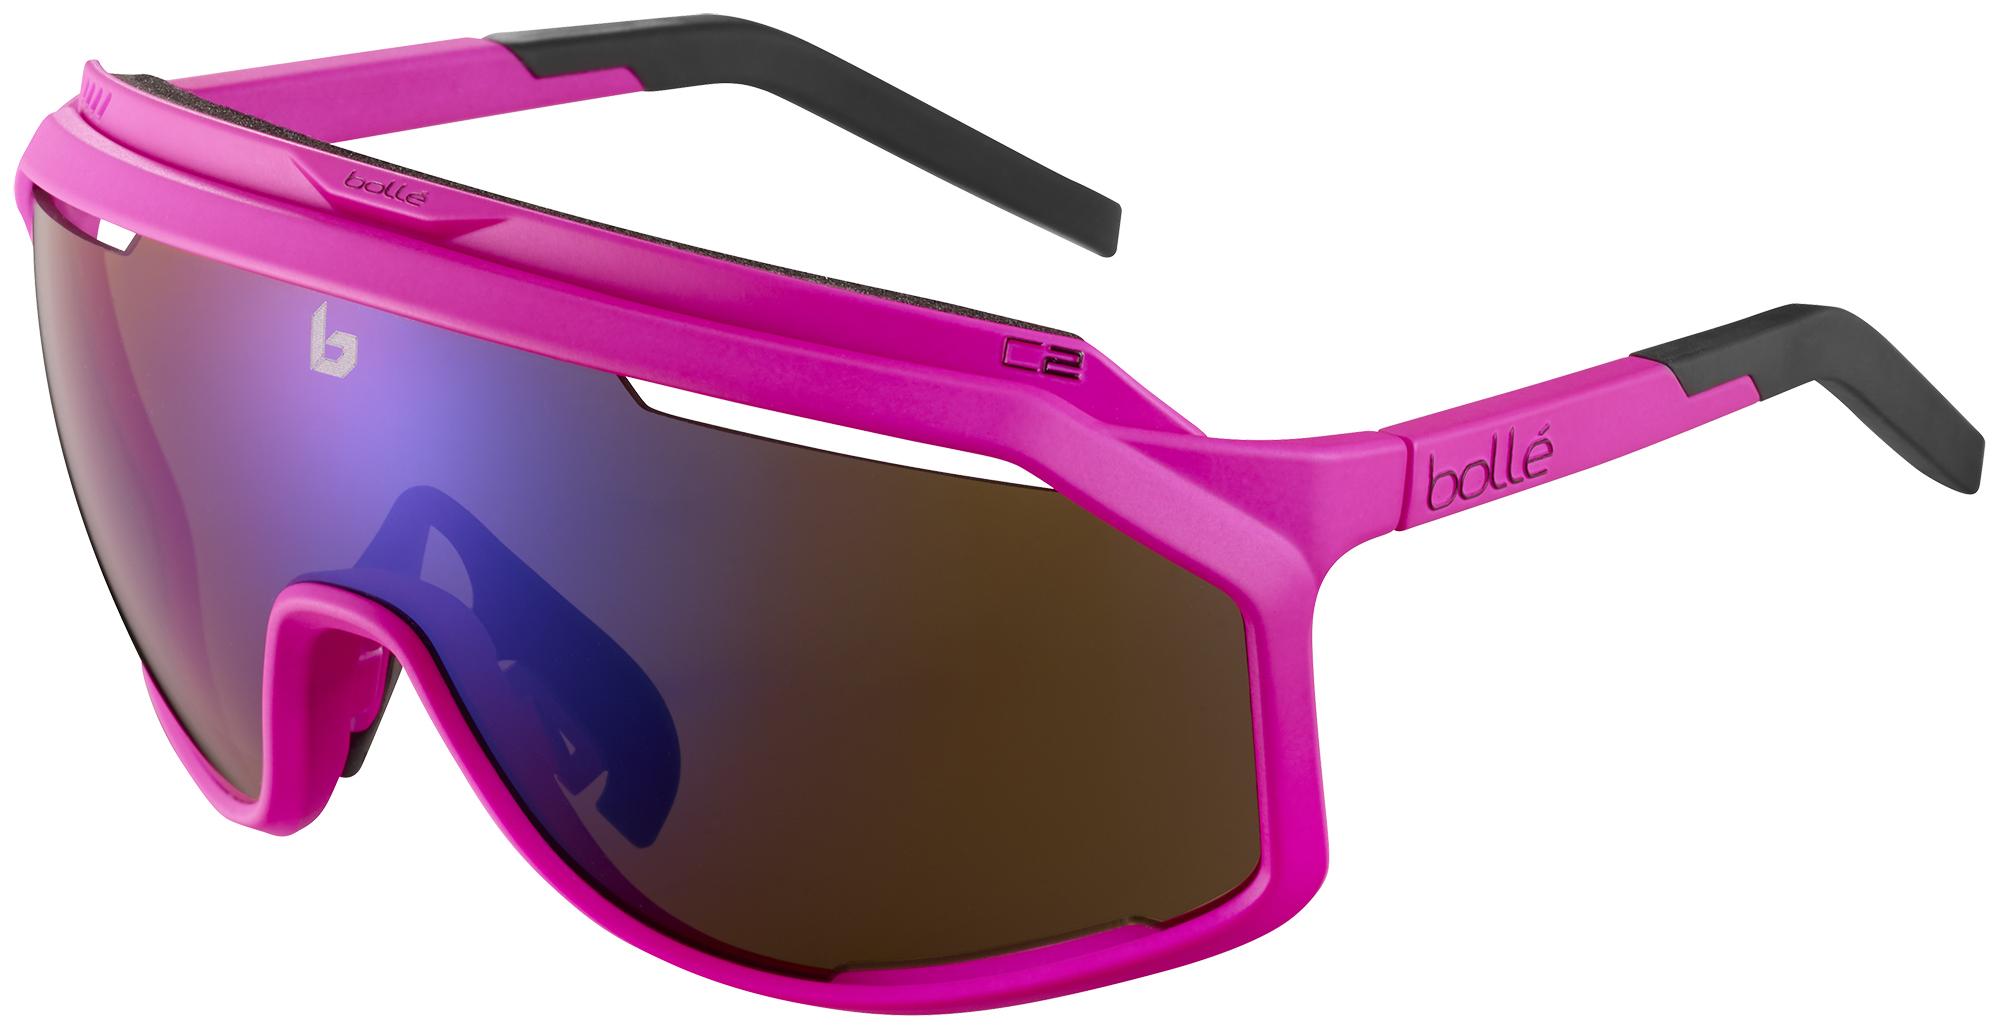 Bolle Cronoshield Matte Pink Sunglasses - Matte Brown/pink/blue